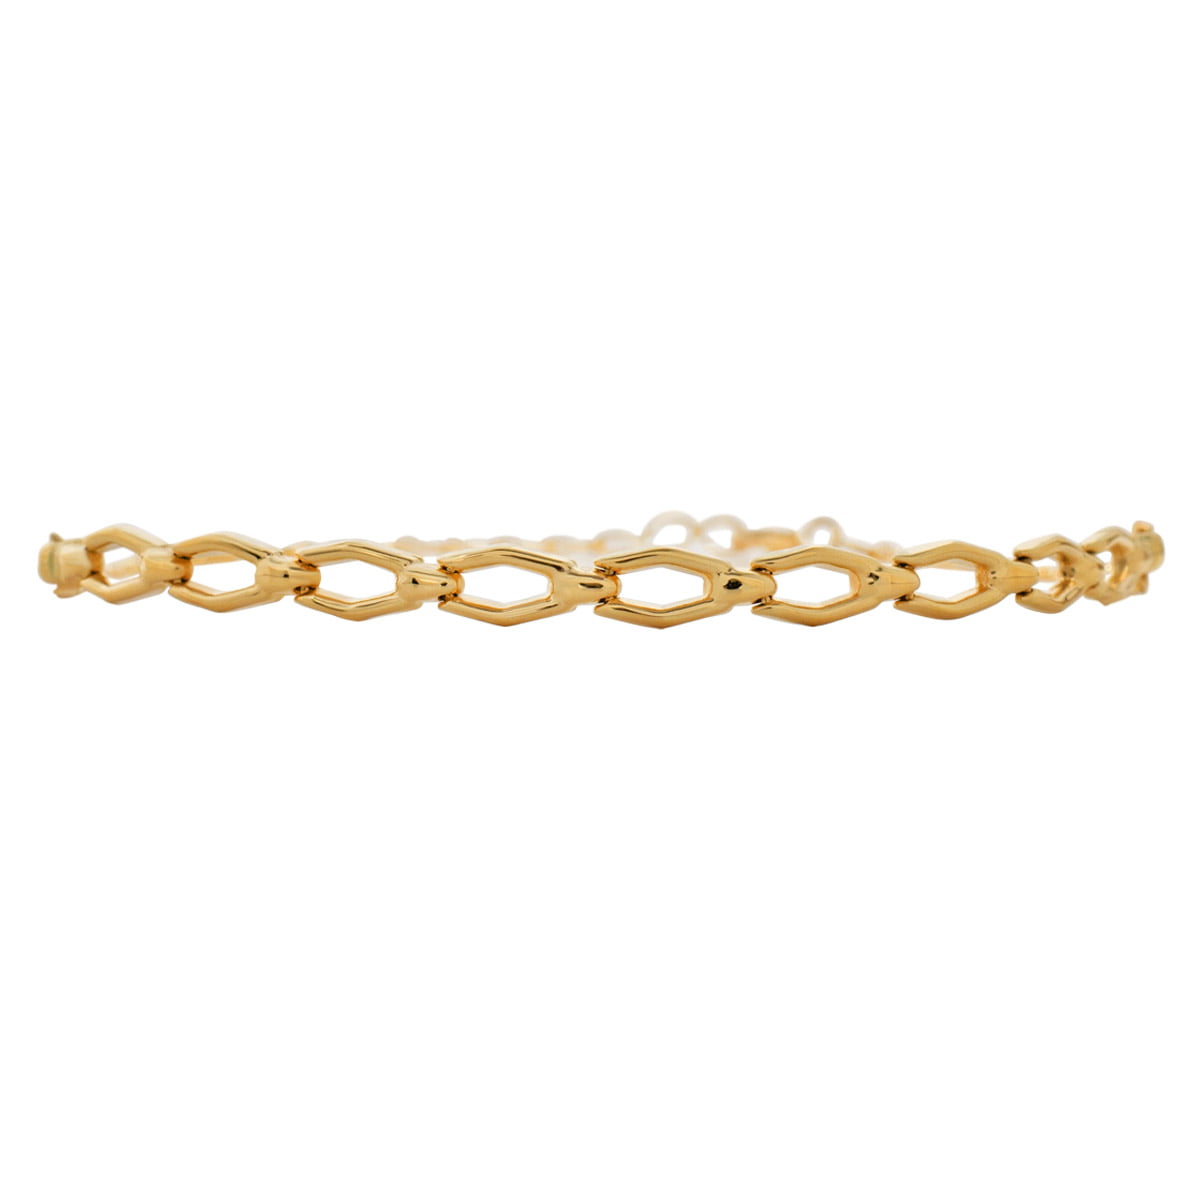 Unica 18ct Rose Gold Chain Bracelet